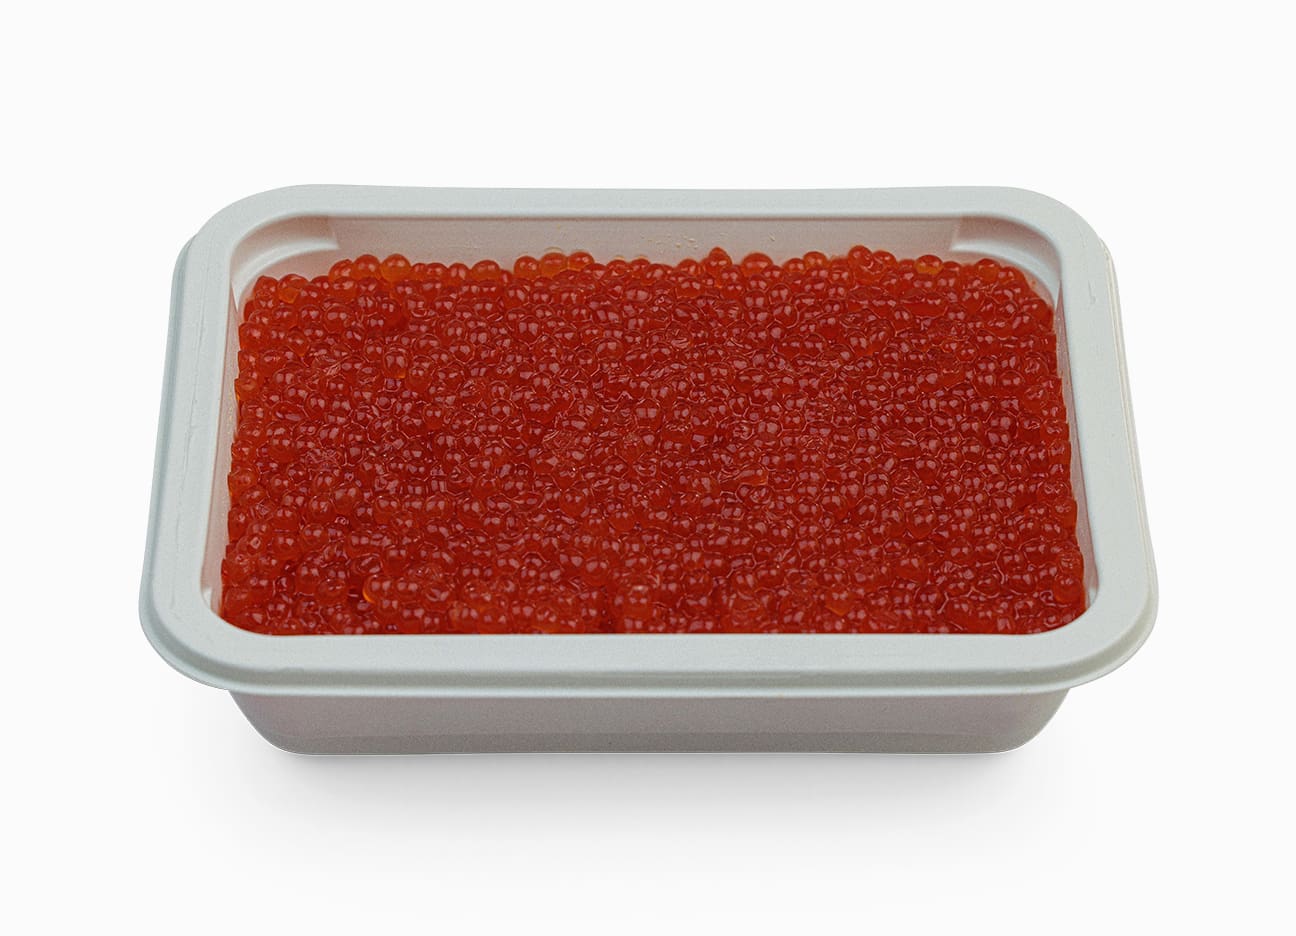 Wild Alaskan Salmon Chum Red Caviar Trident C-1A 35.2 oz in an open package.